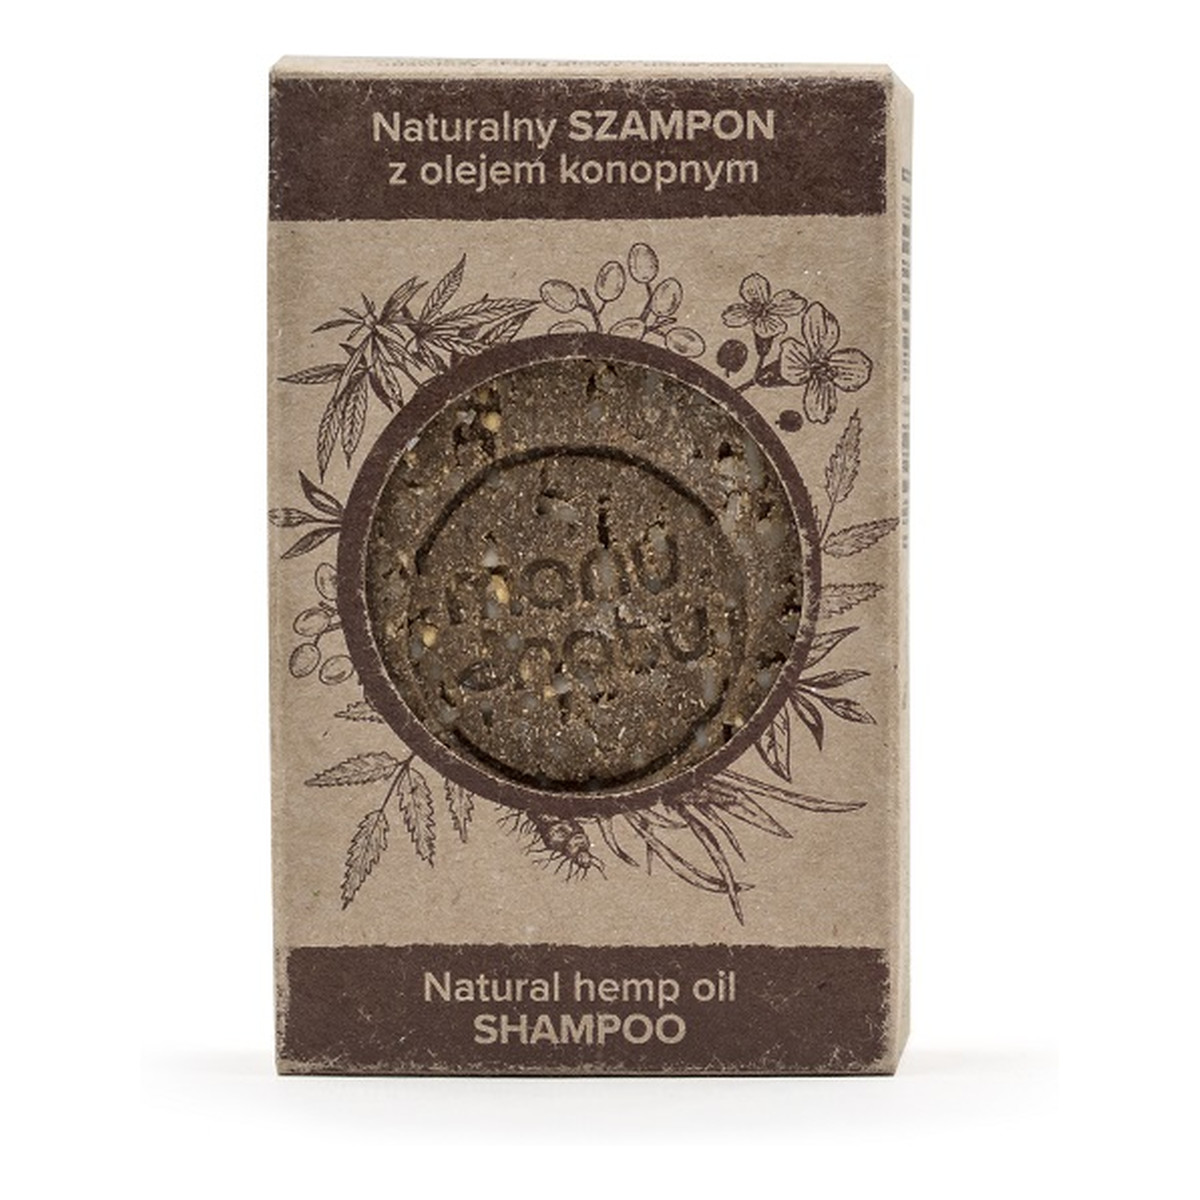 Manu Natu Natural hemp oil shampoo naturalny szampon w kostce z olejem konopnym 90g